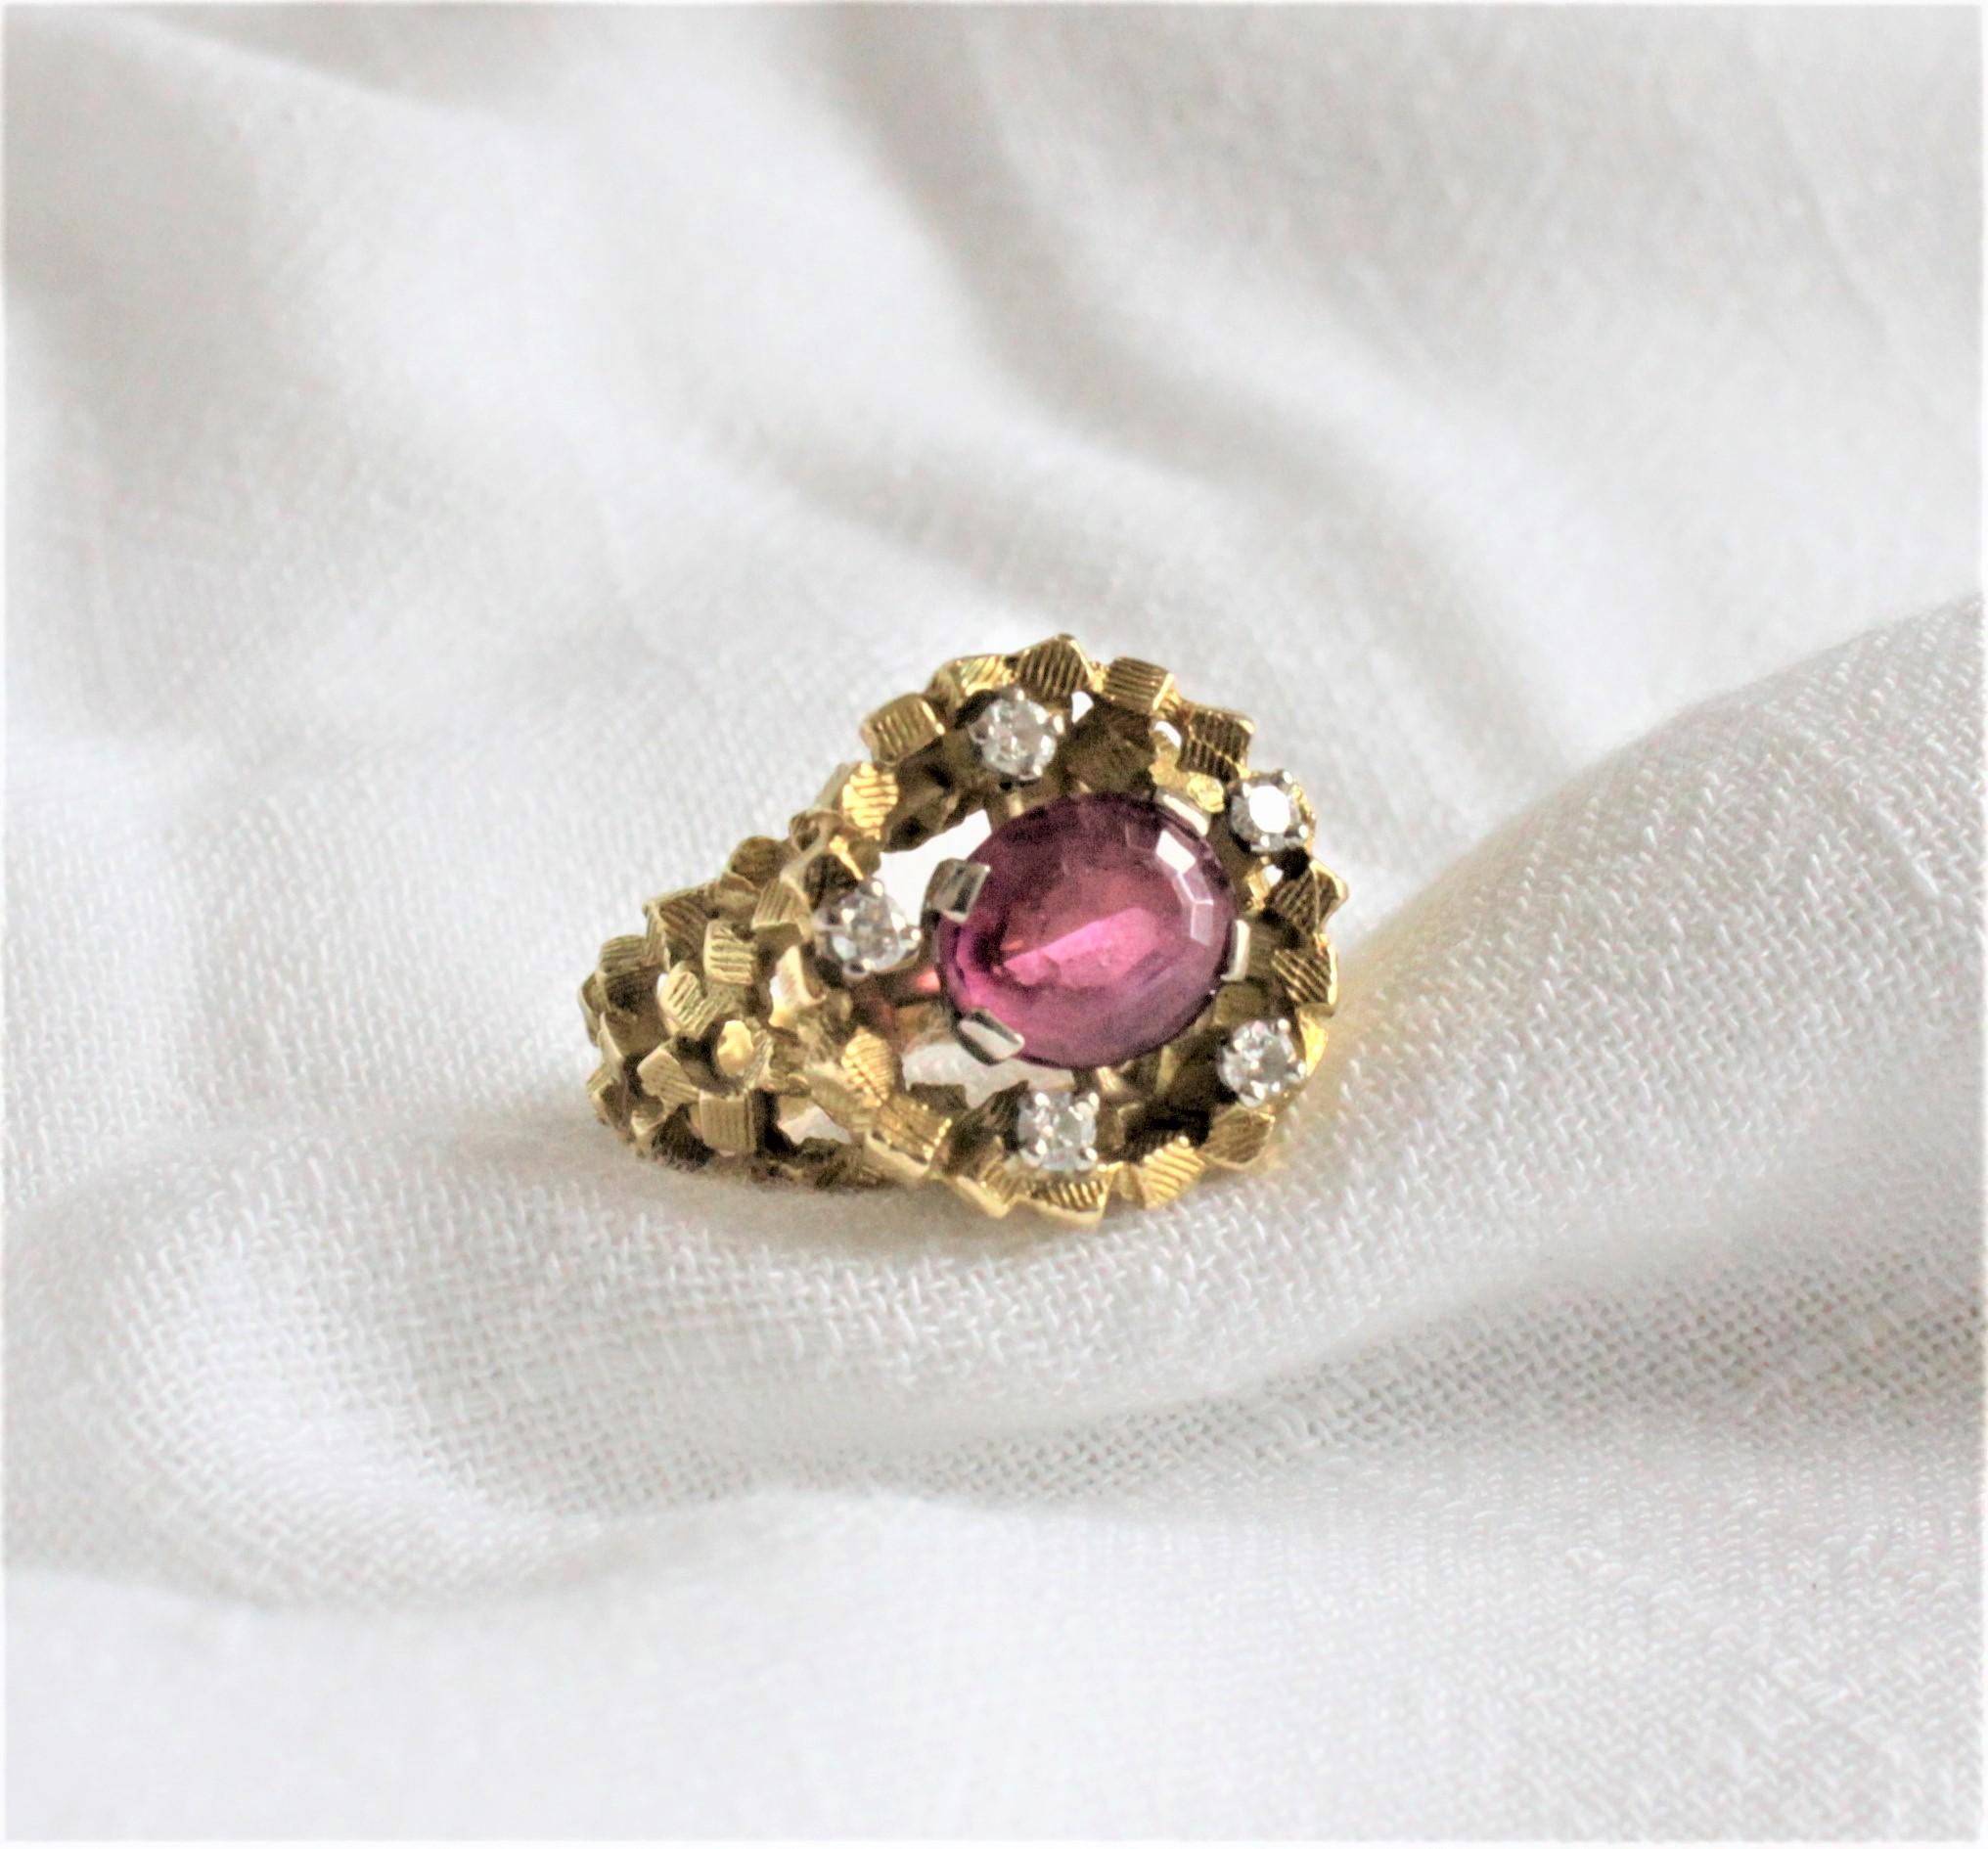 Hand-Crafted John Donald 18-Karat Yellow Gold & Diamond Brutalist Styled Wedding Ring Set